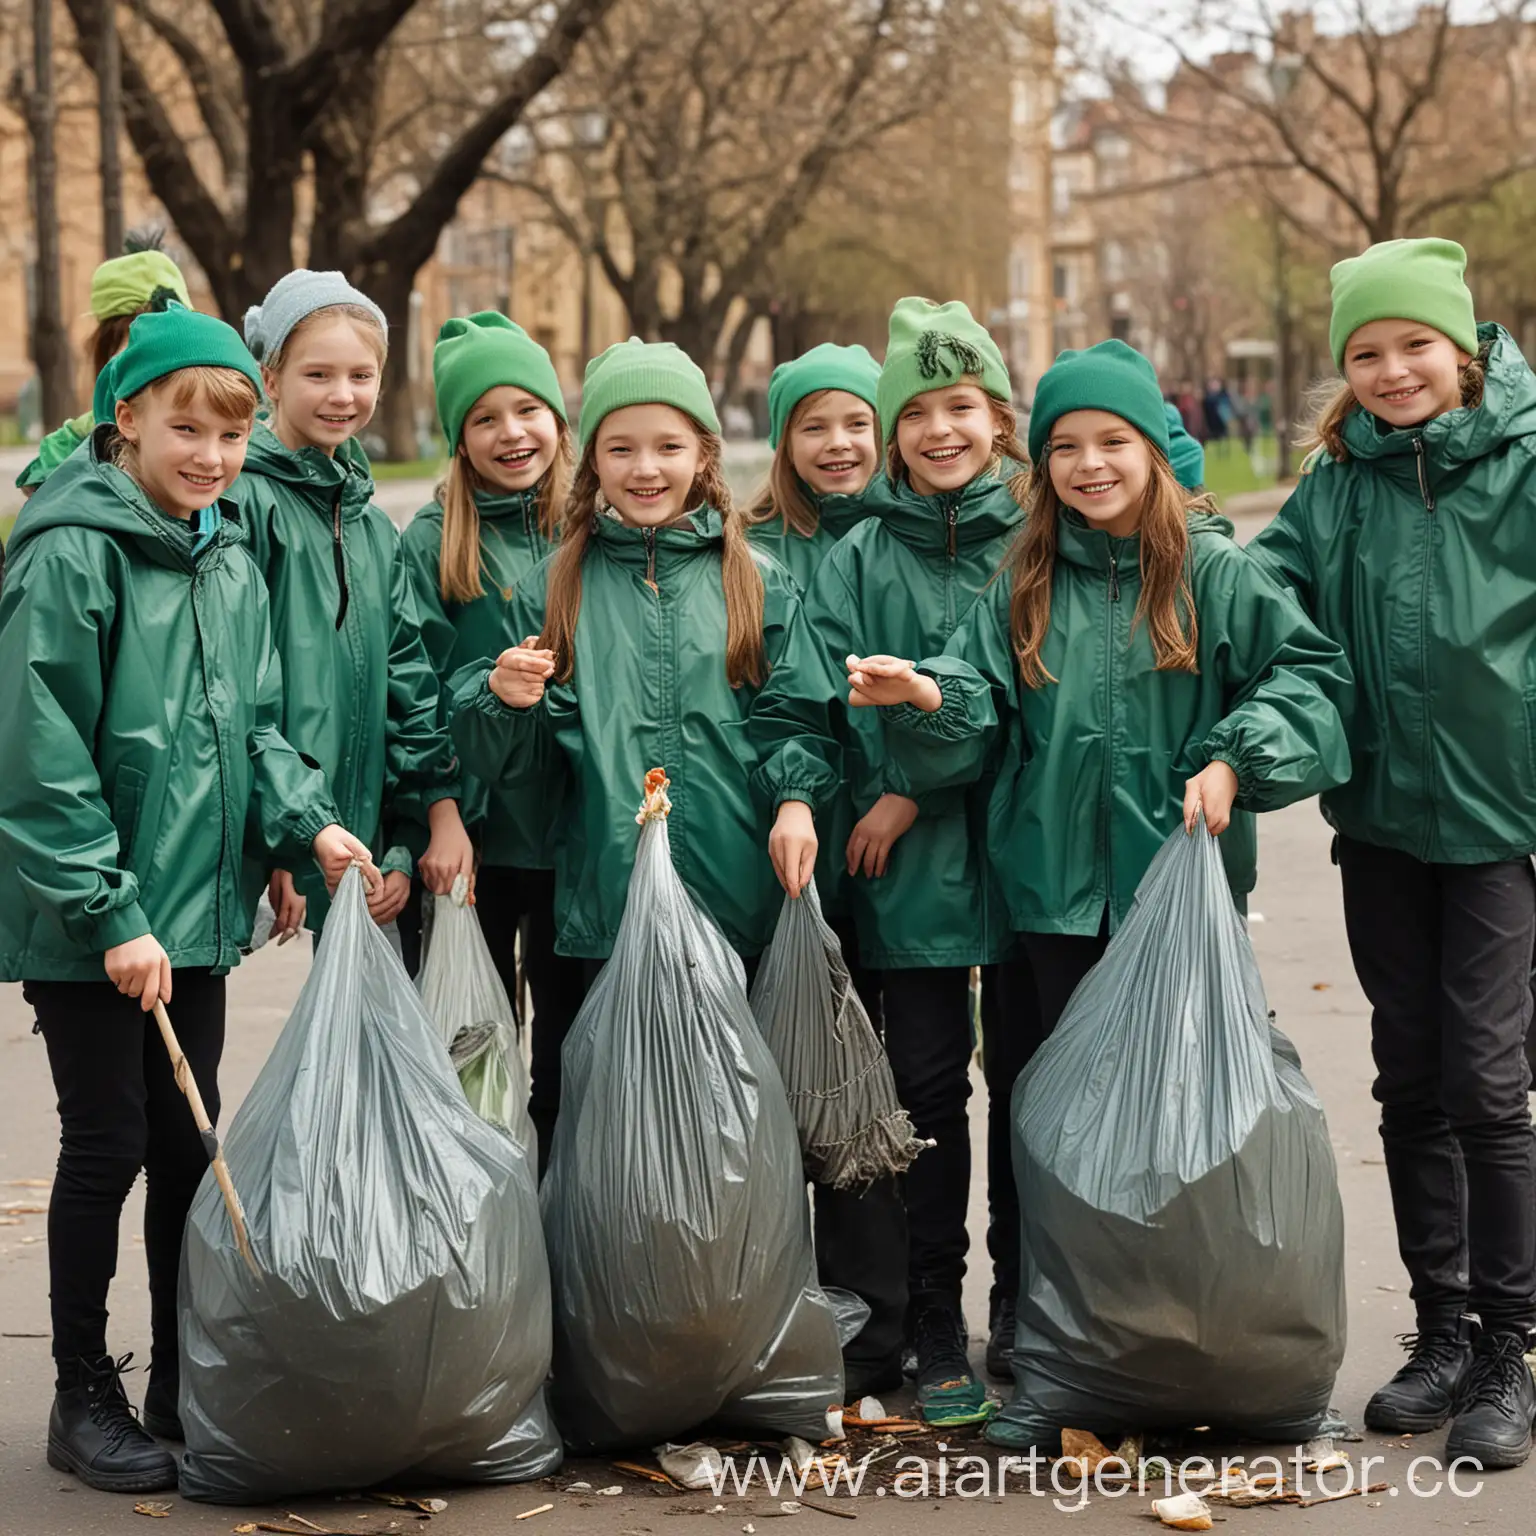 EcoFriendly-Schoolchildren-Volunteering-Park-Cleanup-with-Smiles